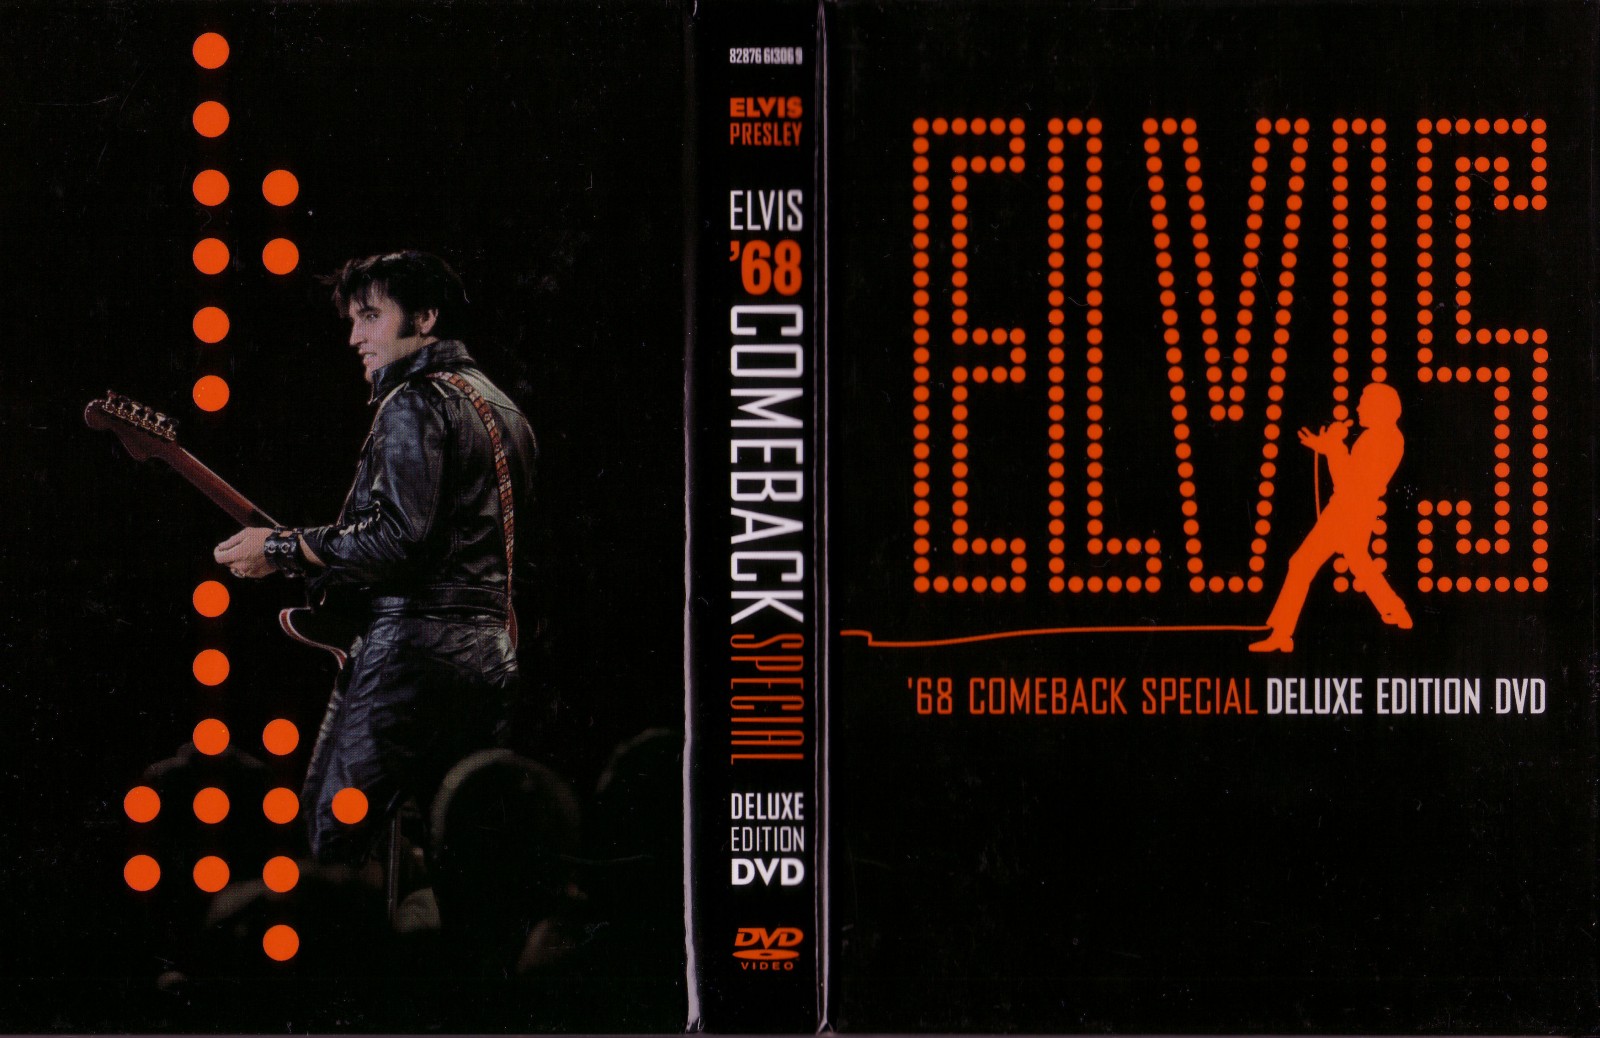 Jaquette DVD Elvis 68 Comeback special